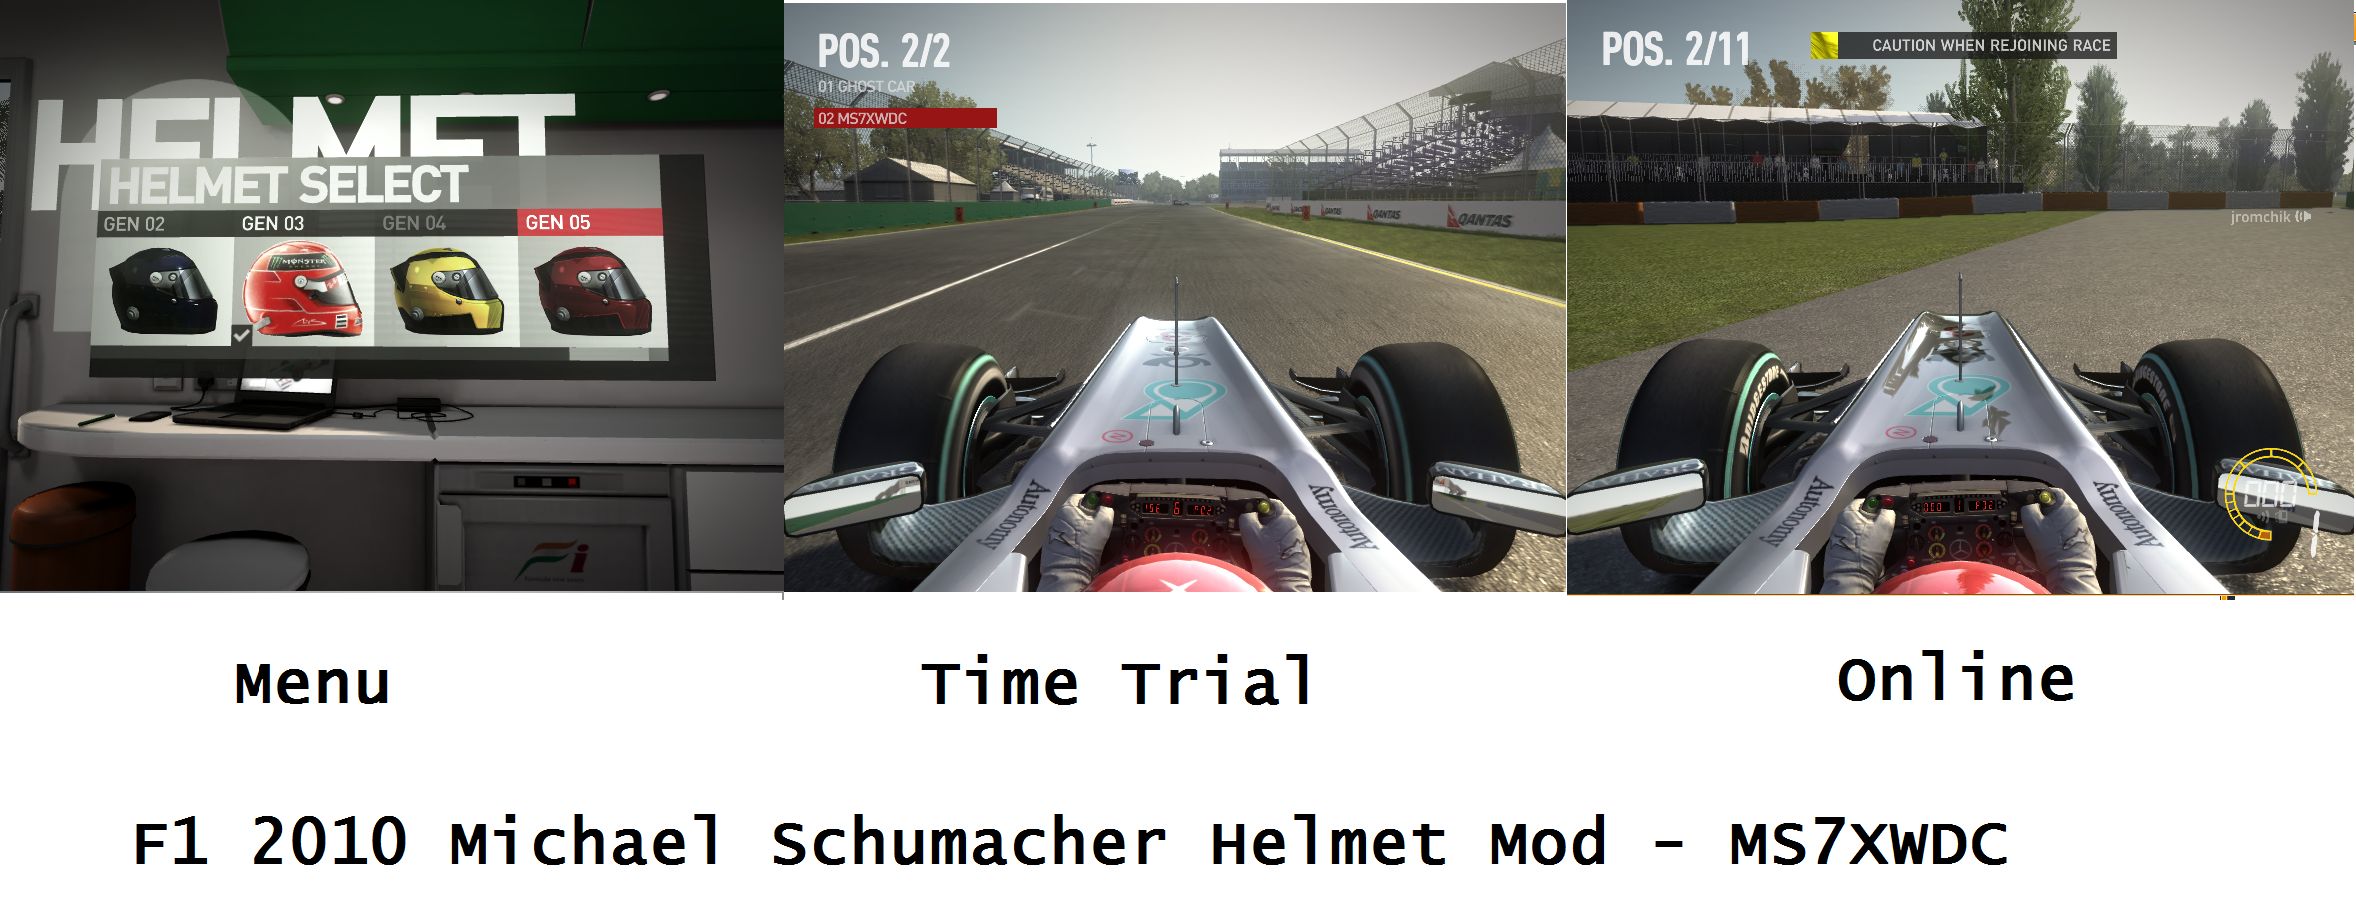 F1 2010 Michael Schumacher Helmet Mod - all game modes - MS7XWDC file